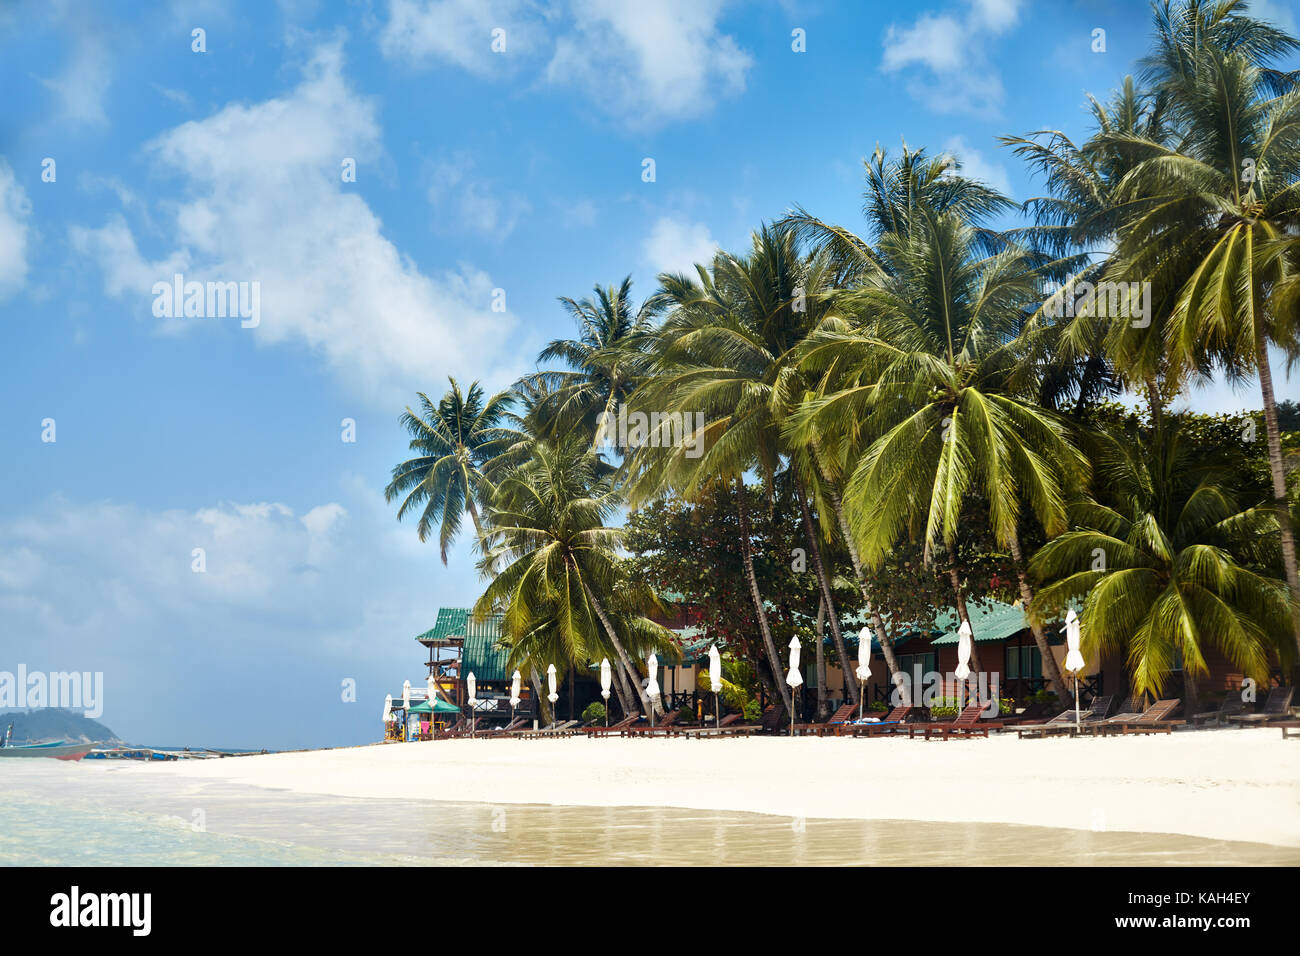 Tropical resort on the beach Stock Photo